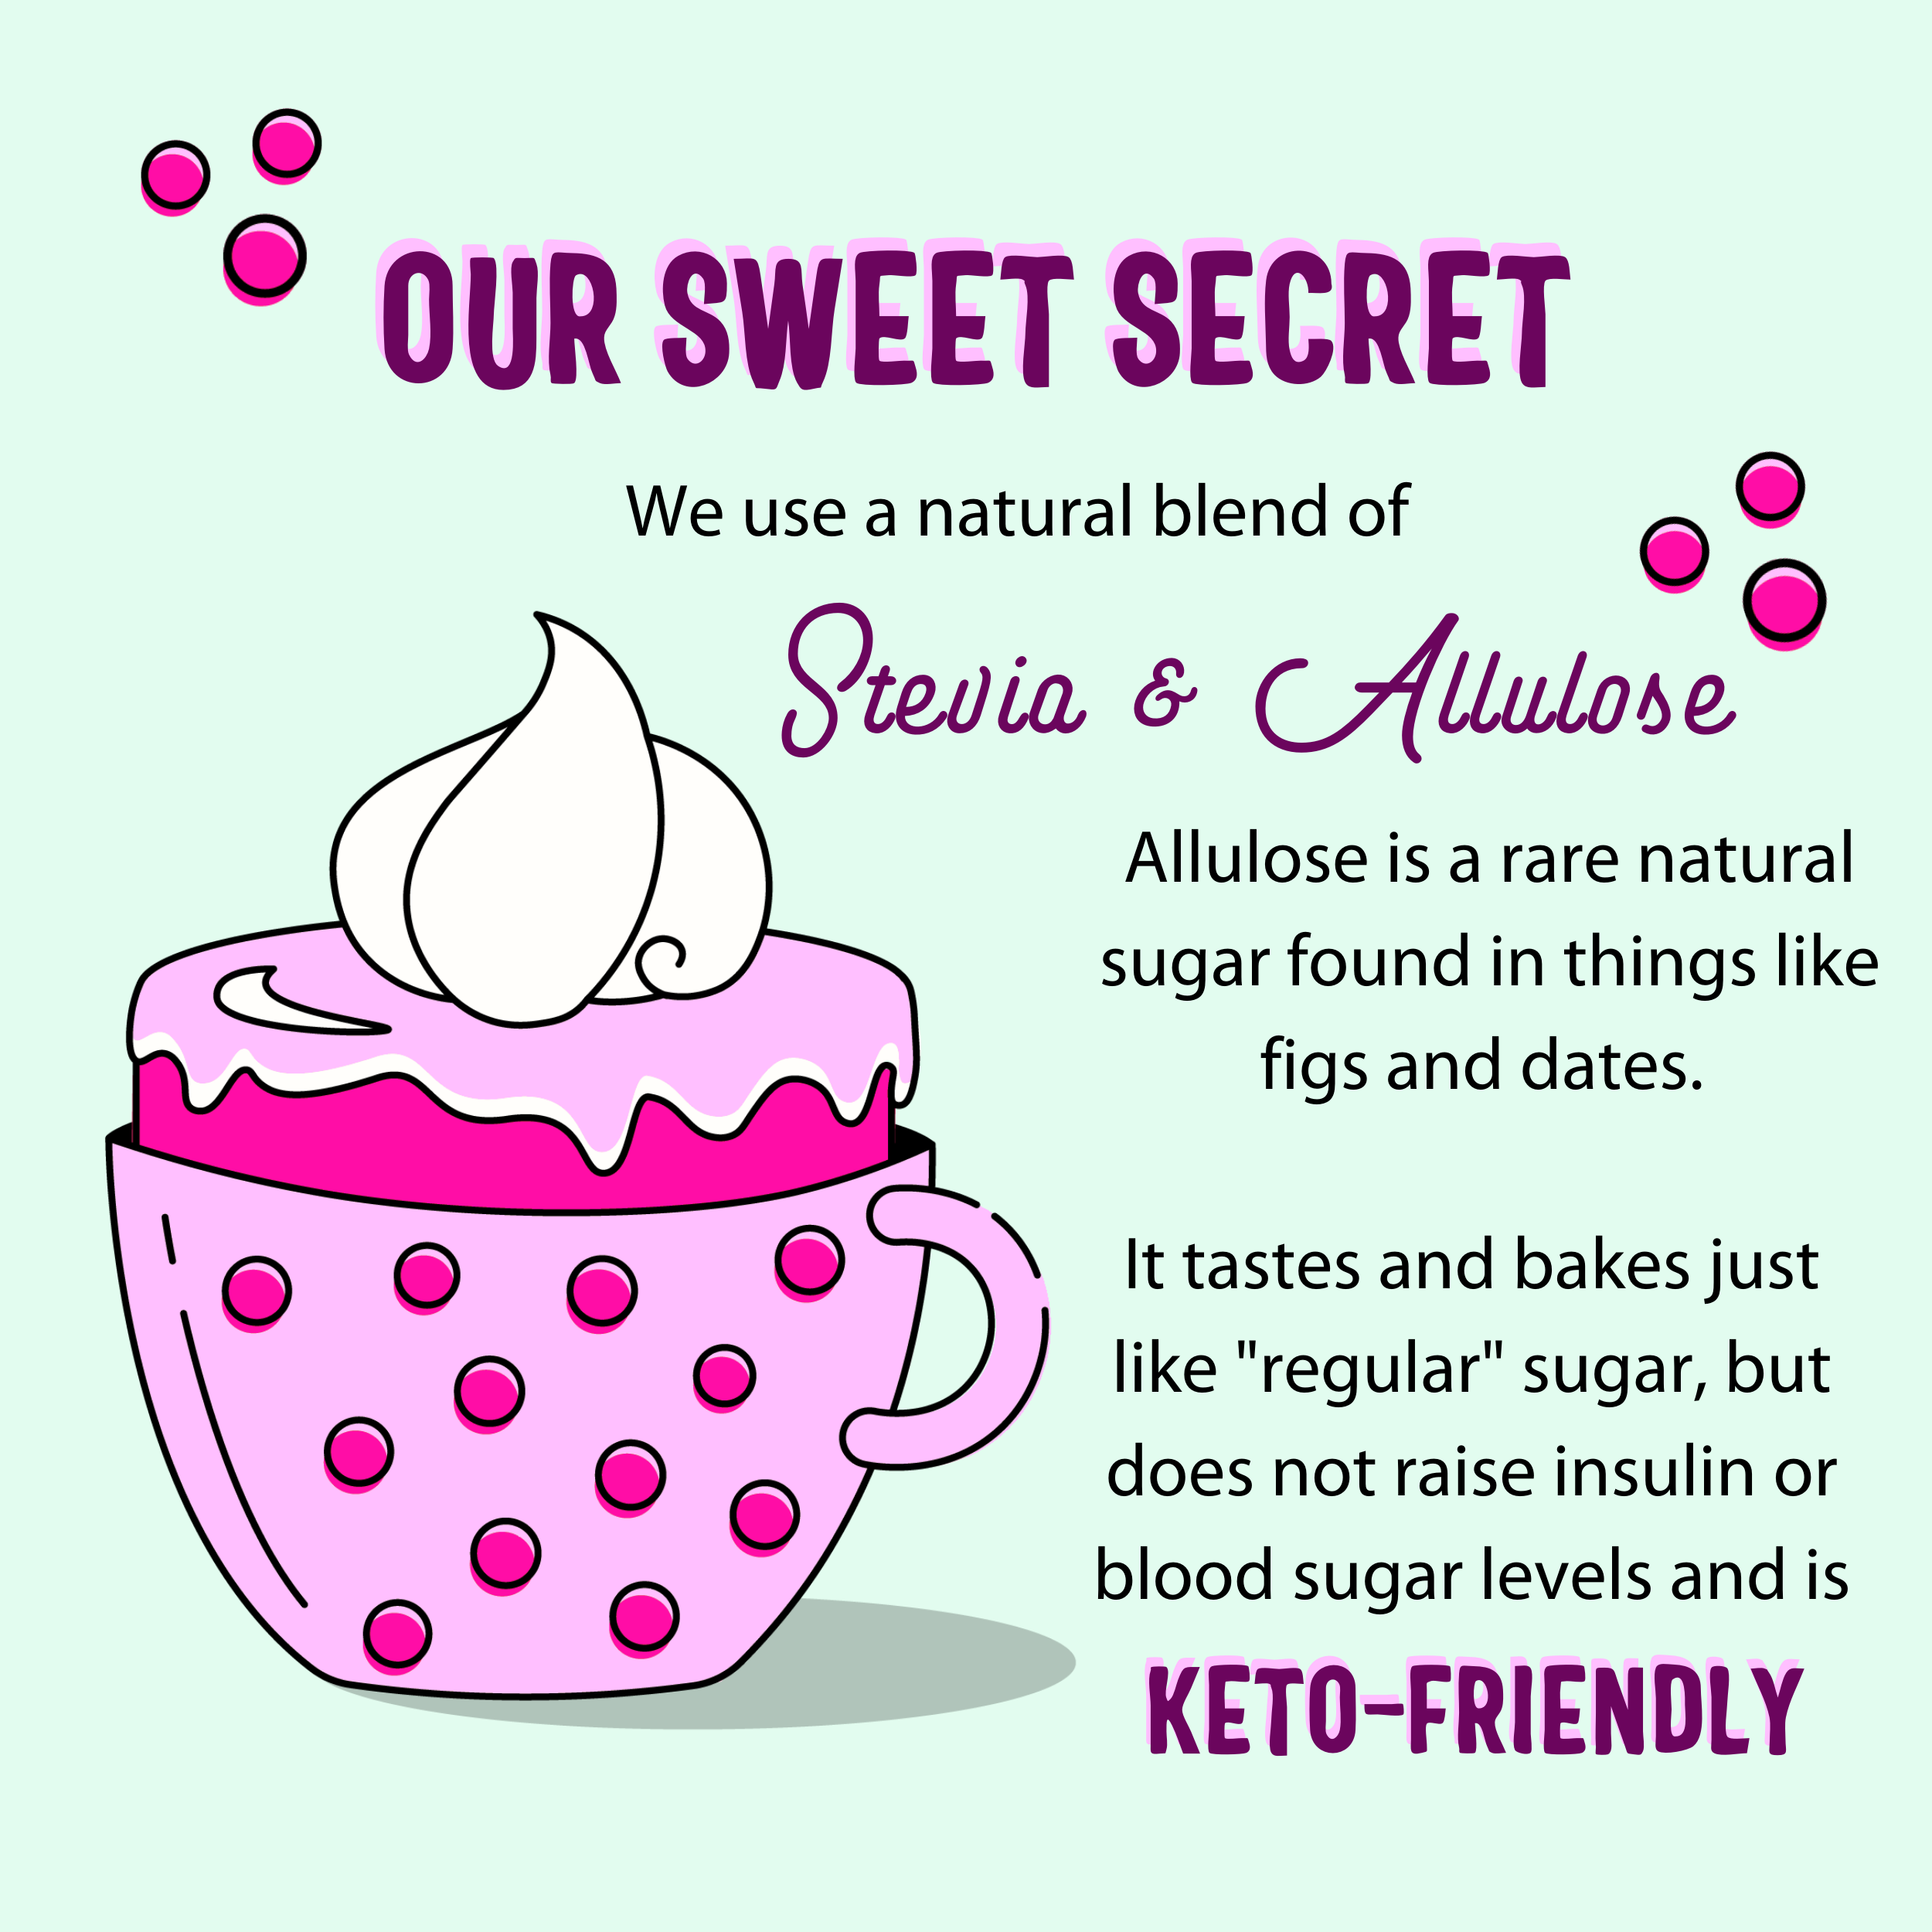 Keto Chocolate Cake Baking Mix (1-Pack) Low Carb, Low Sugar, Diabetic Friendly, Gluten Free